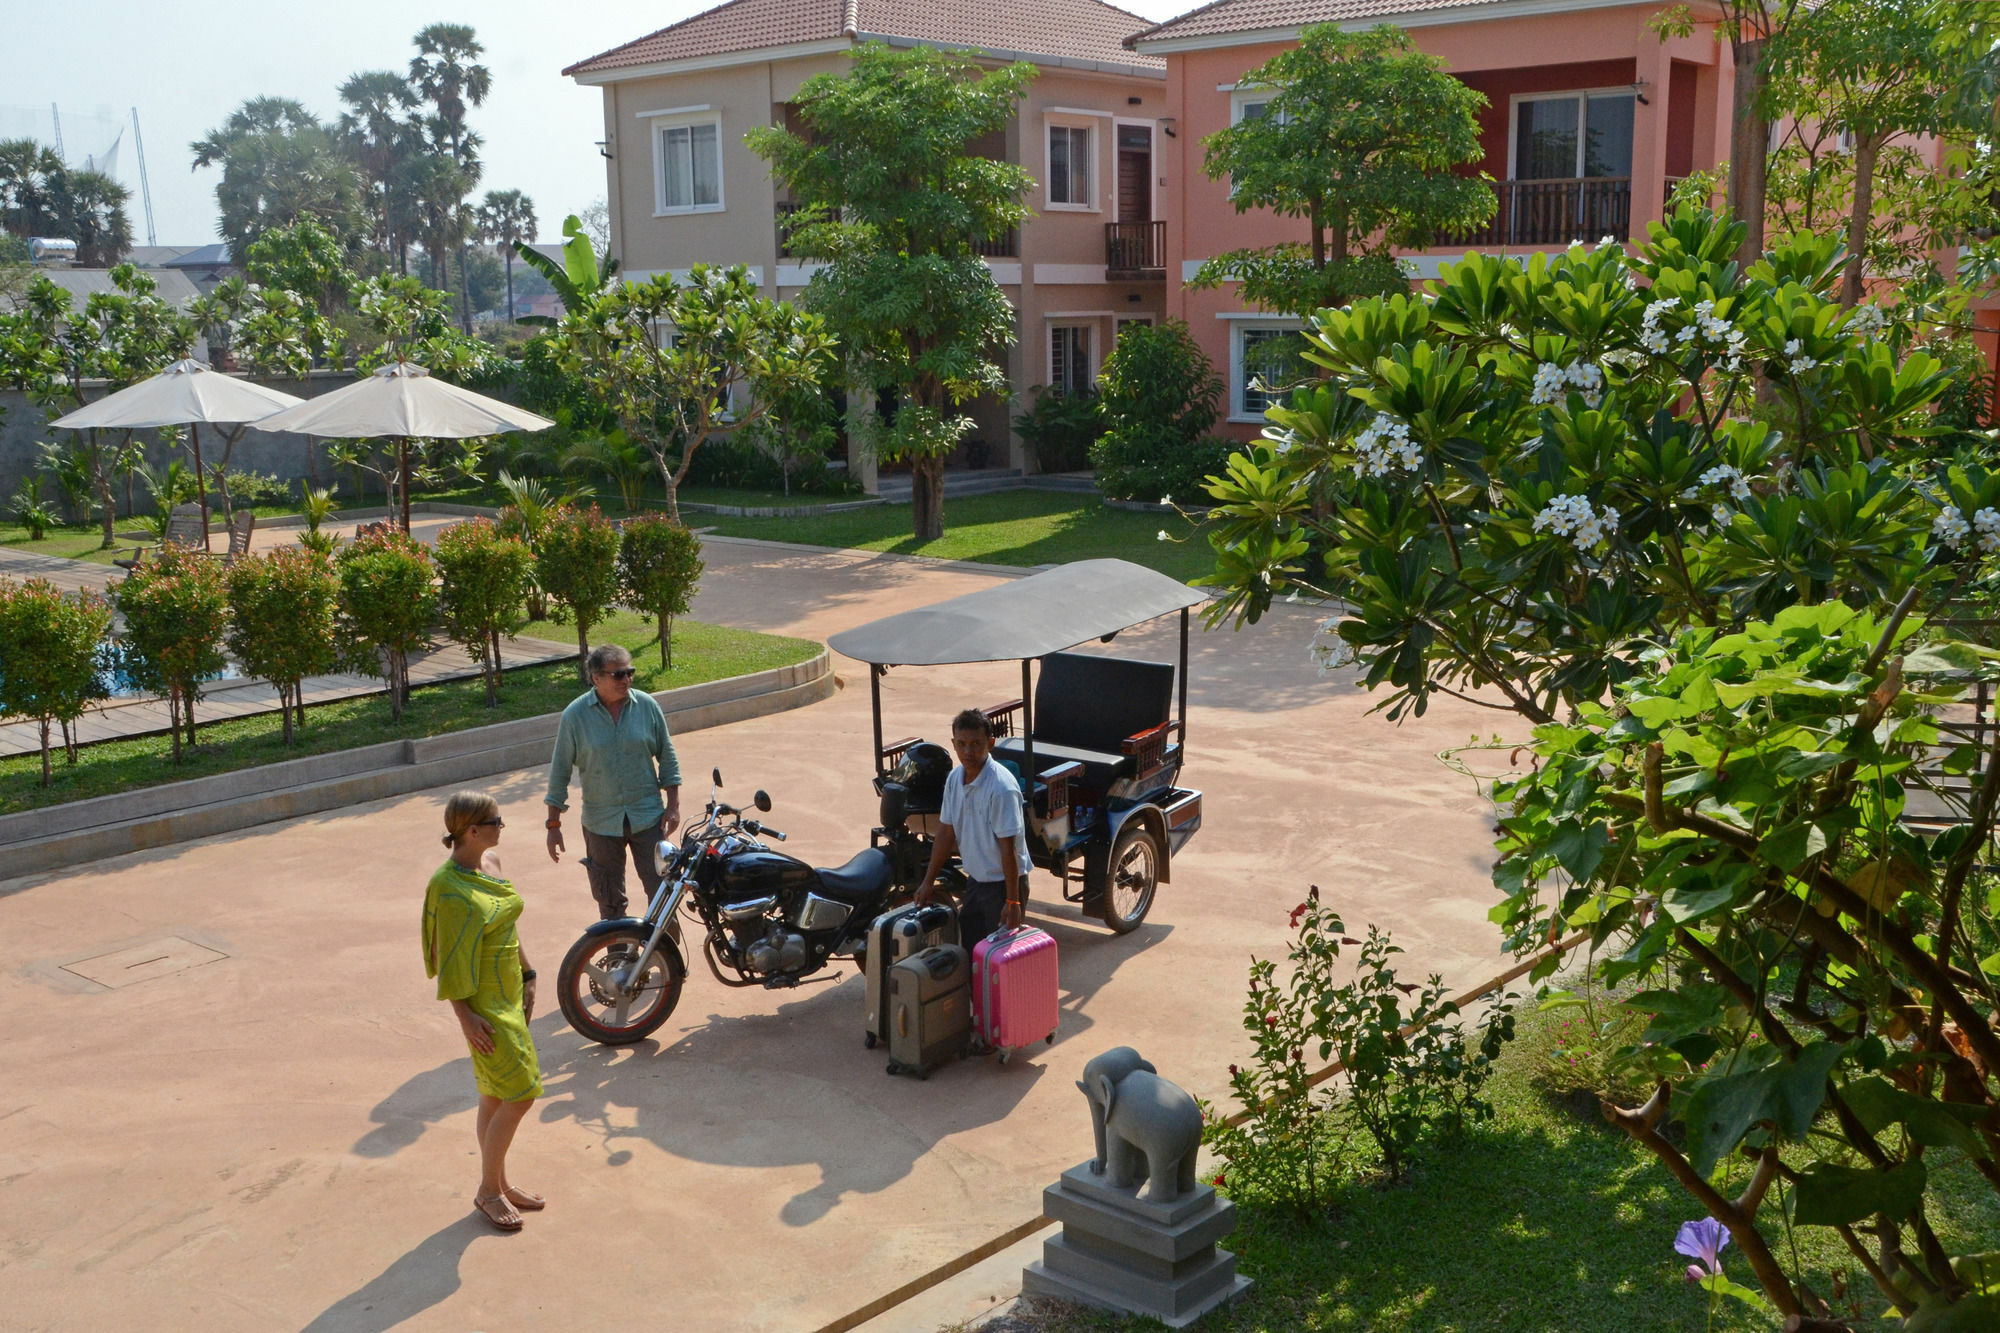 Les Residences Yen Dy Angkor 暹粒 外观 照片